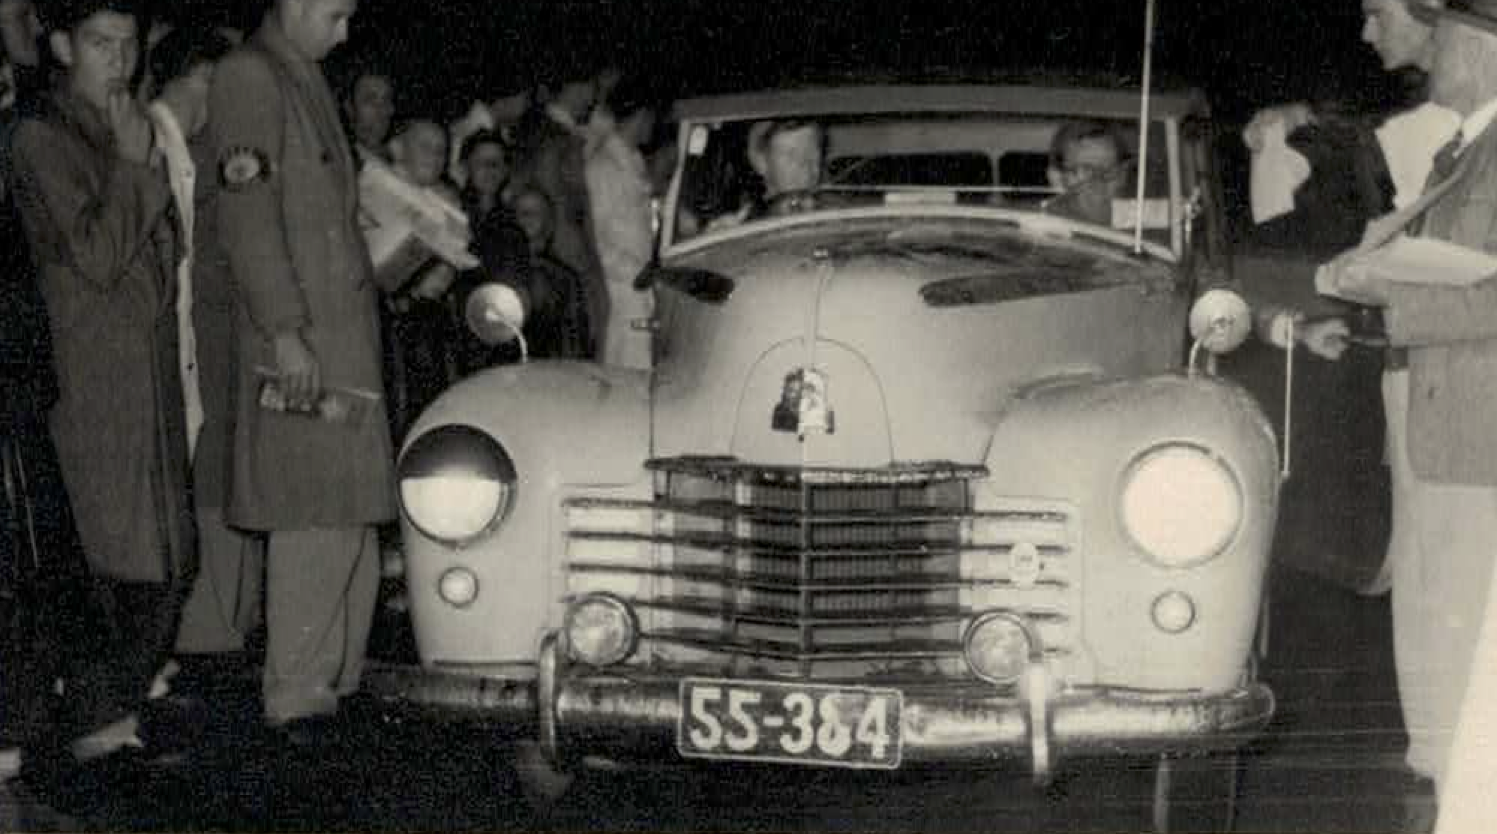 Gordon Darge in the 1959 Mobilgas Economy Run